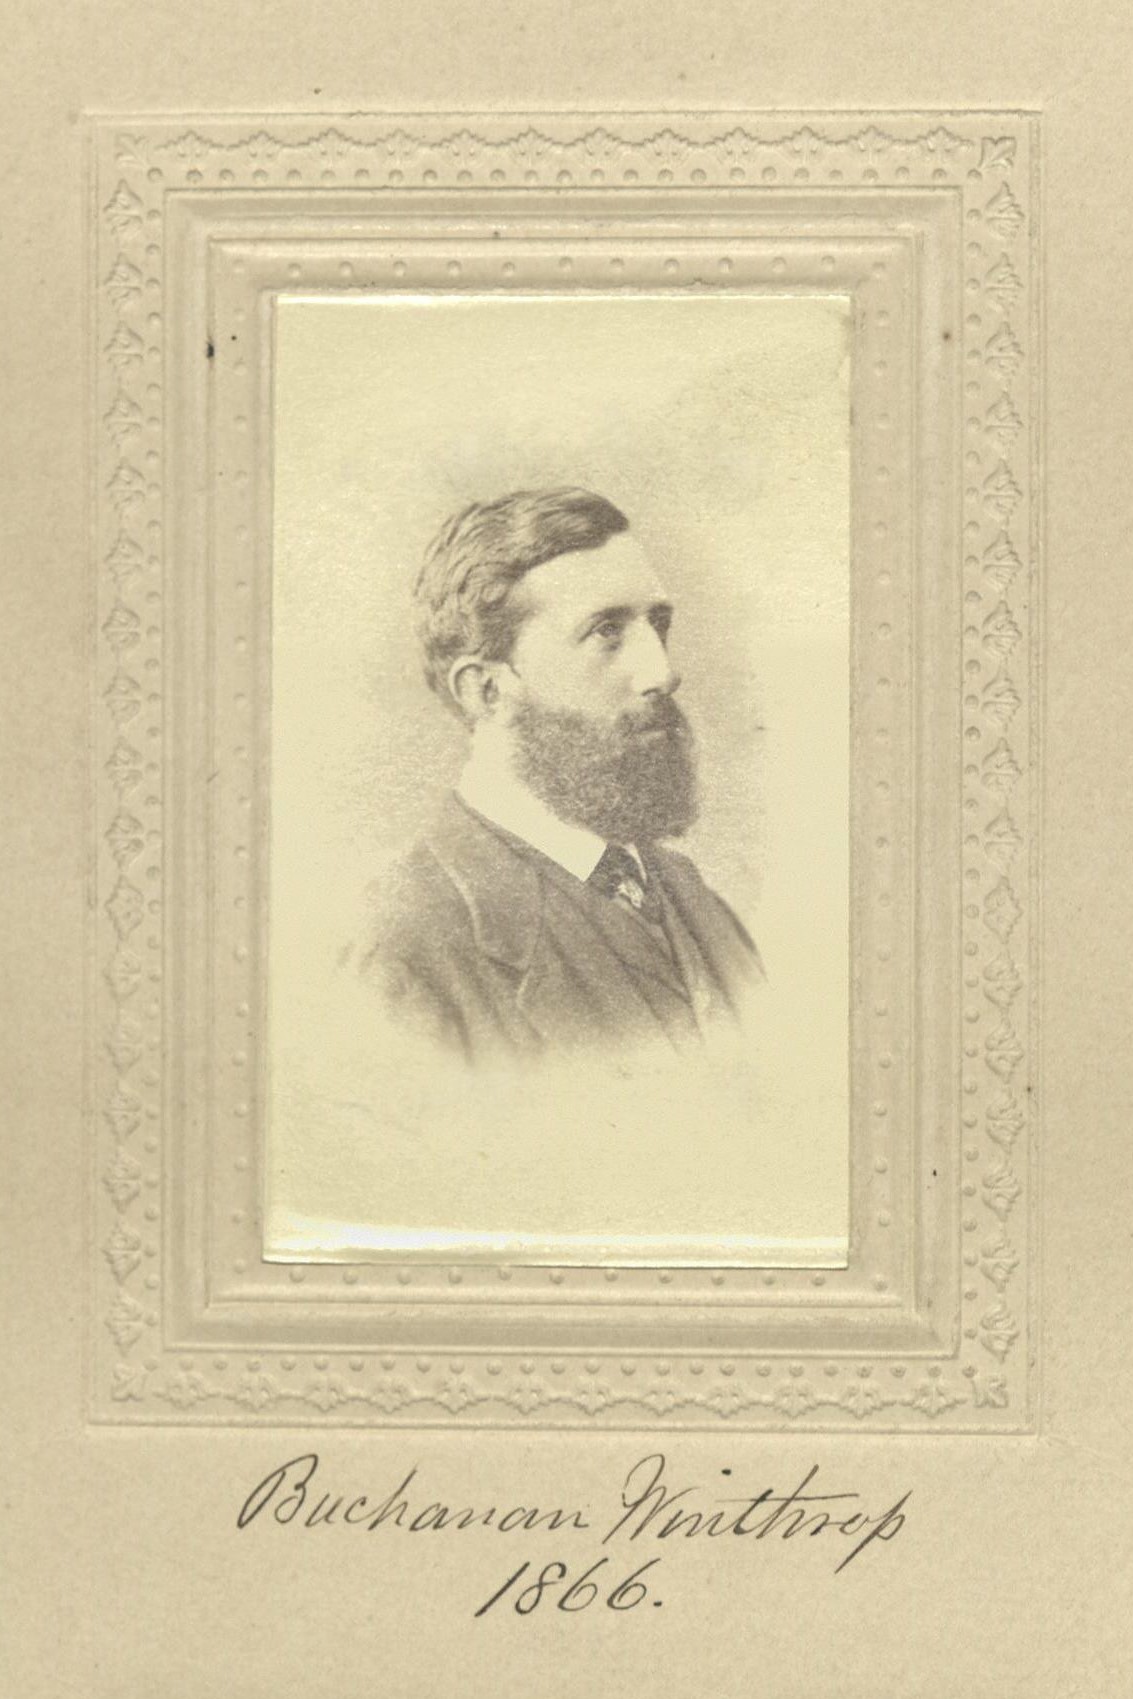 Member portrait of Buchanan Winthrop